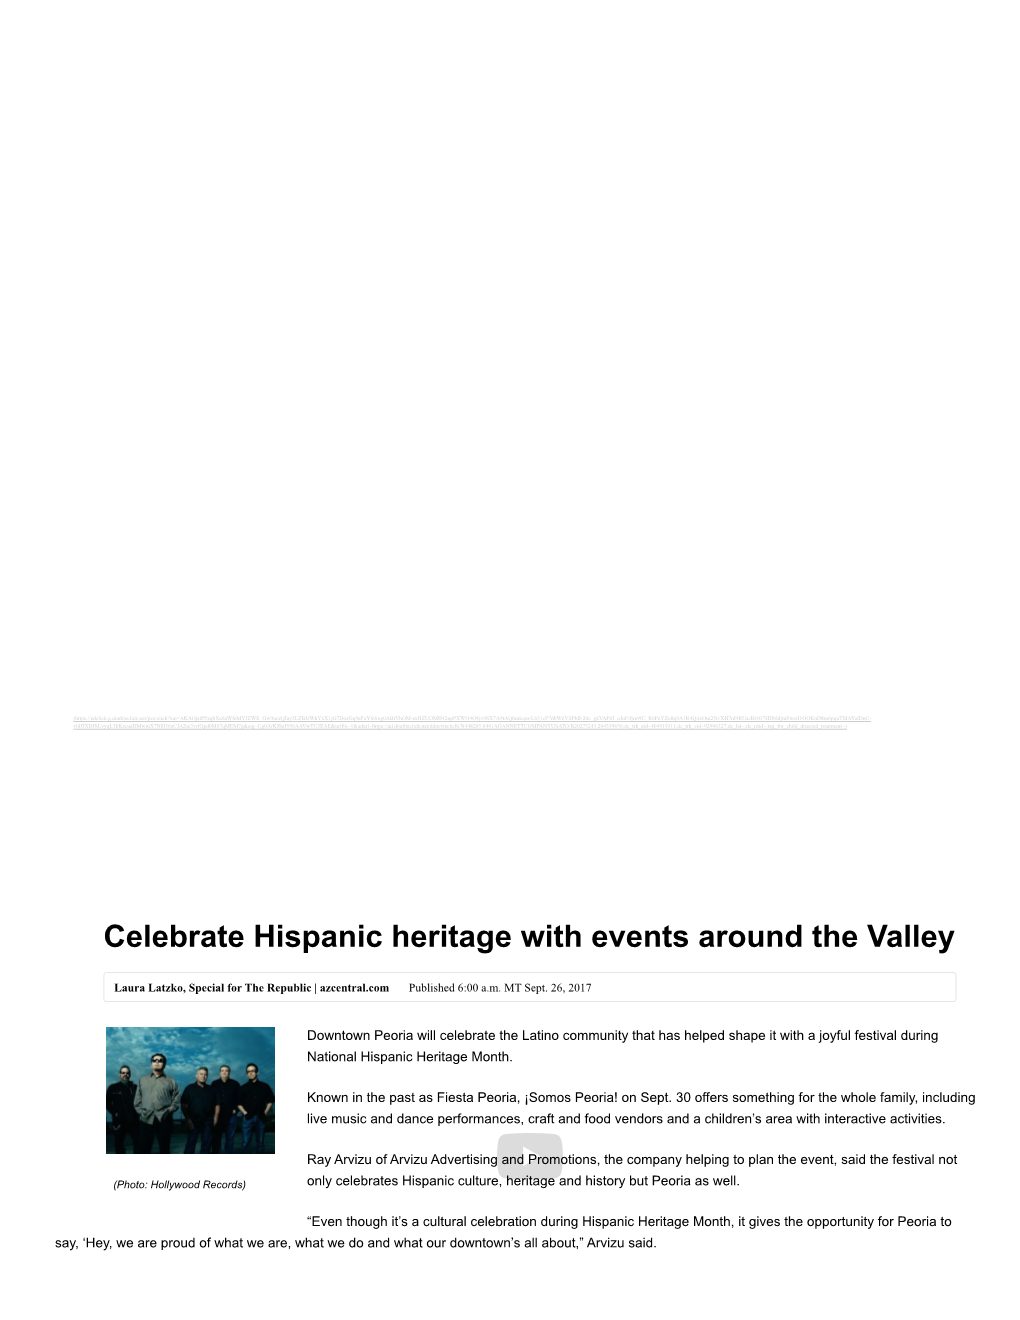 Celebrate Hispanic Heritage with Events Around the Valley